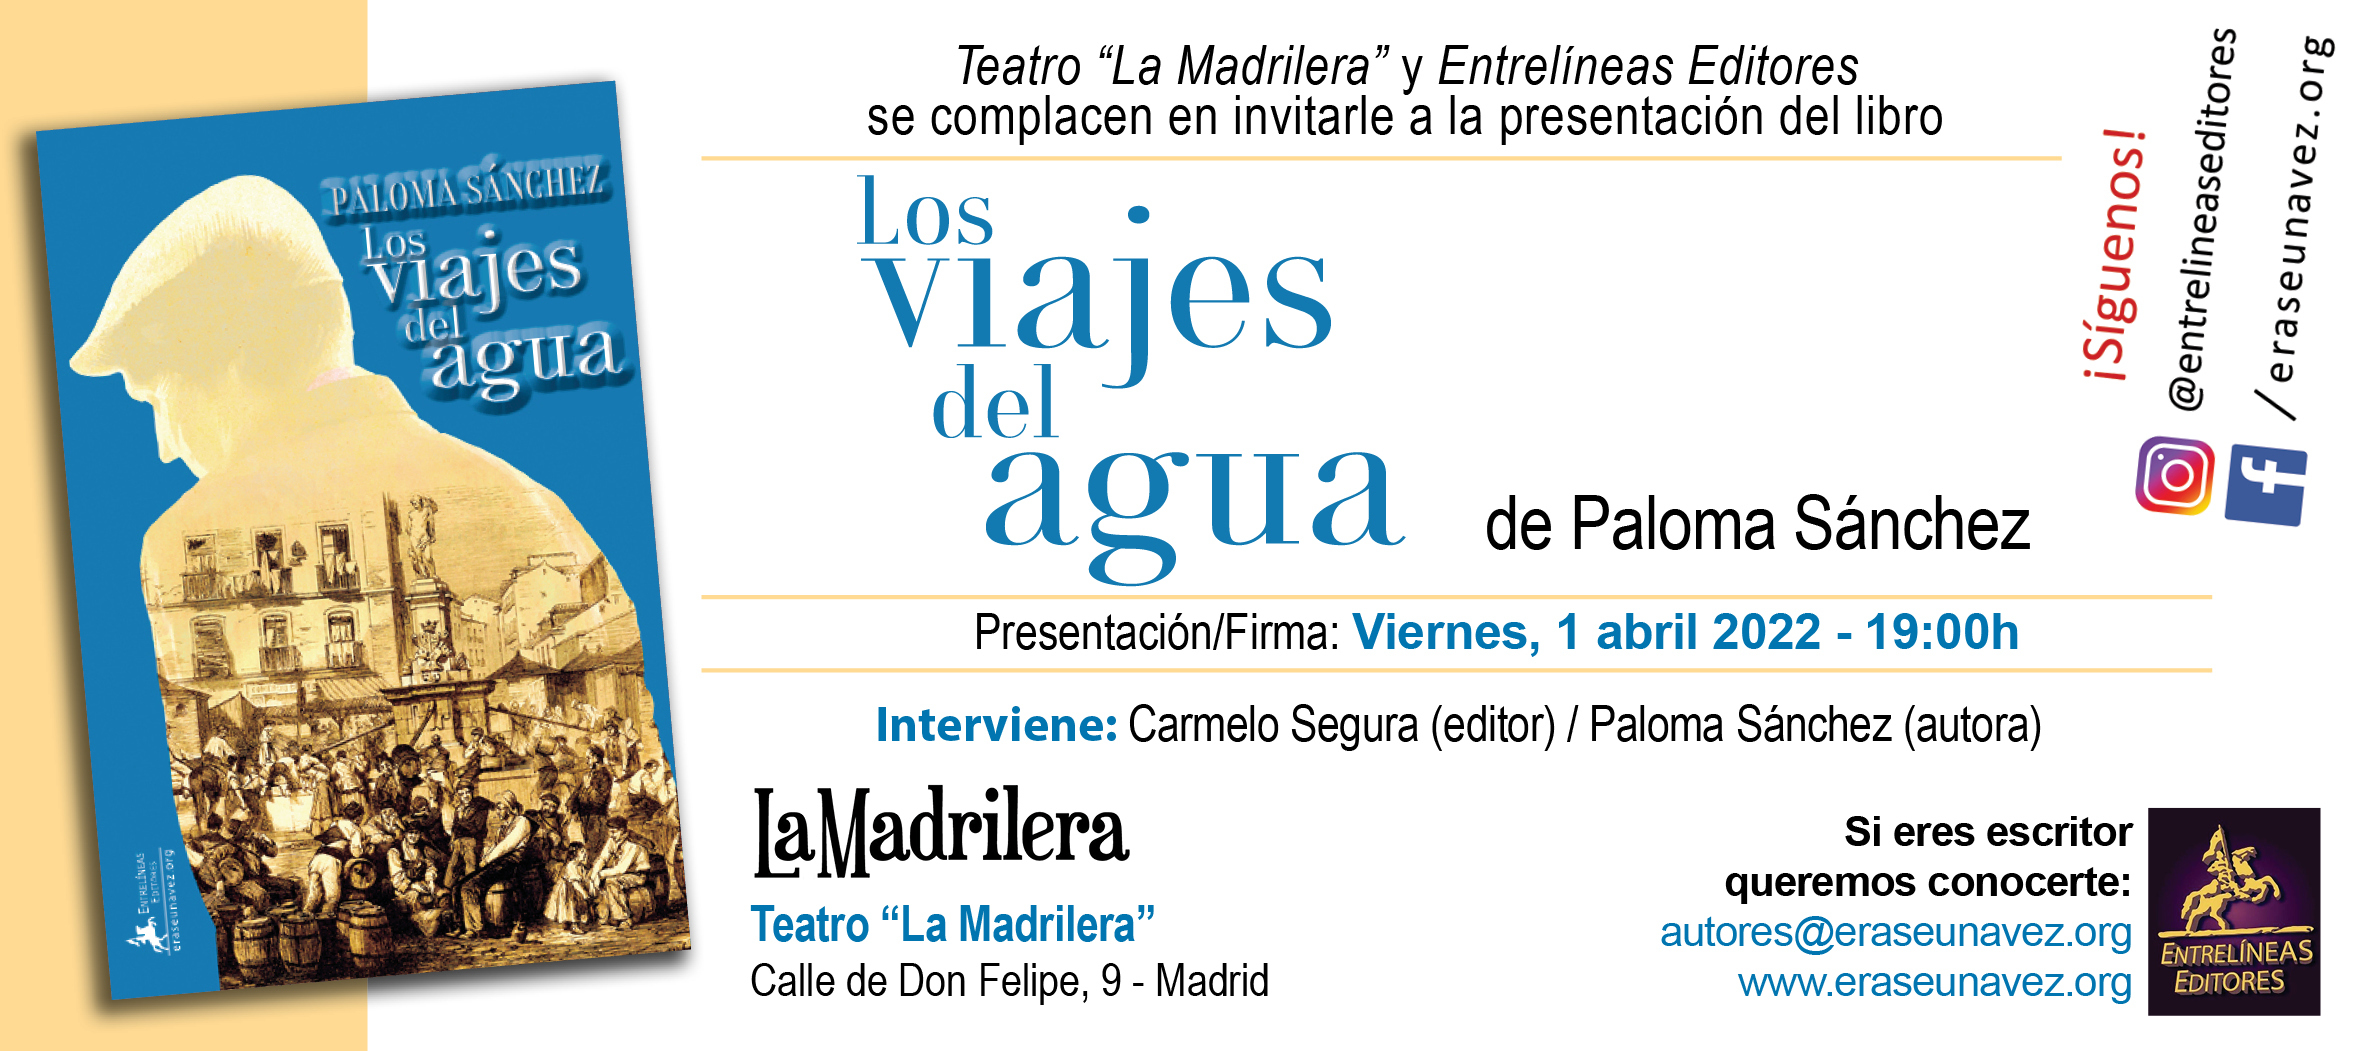 2022-04-01_-viajes_del_agua_-_invitacion